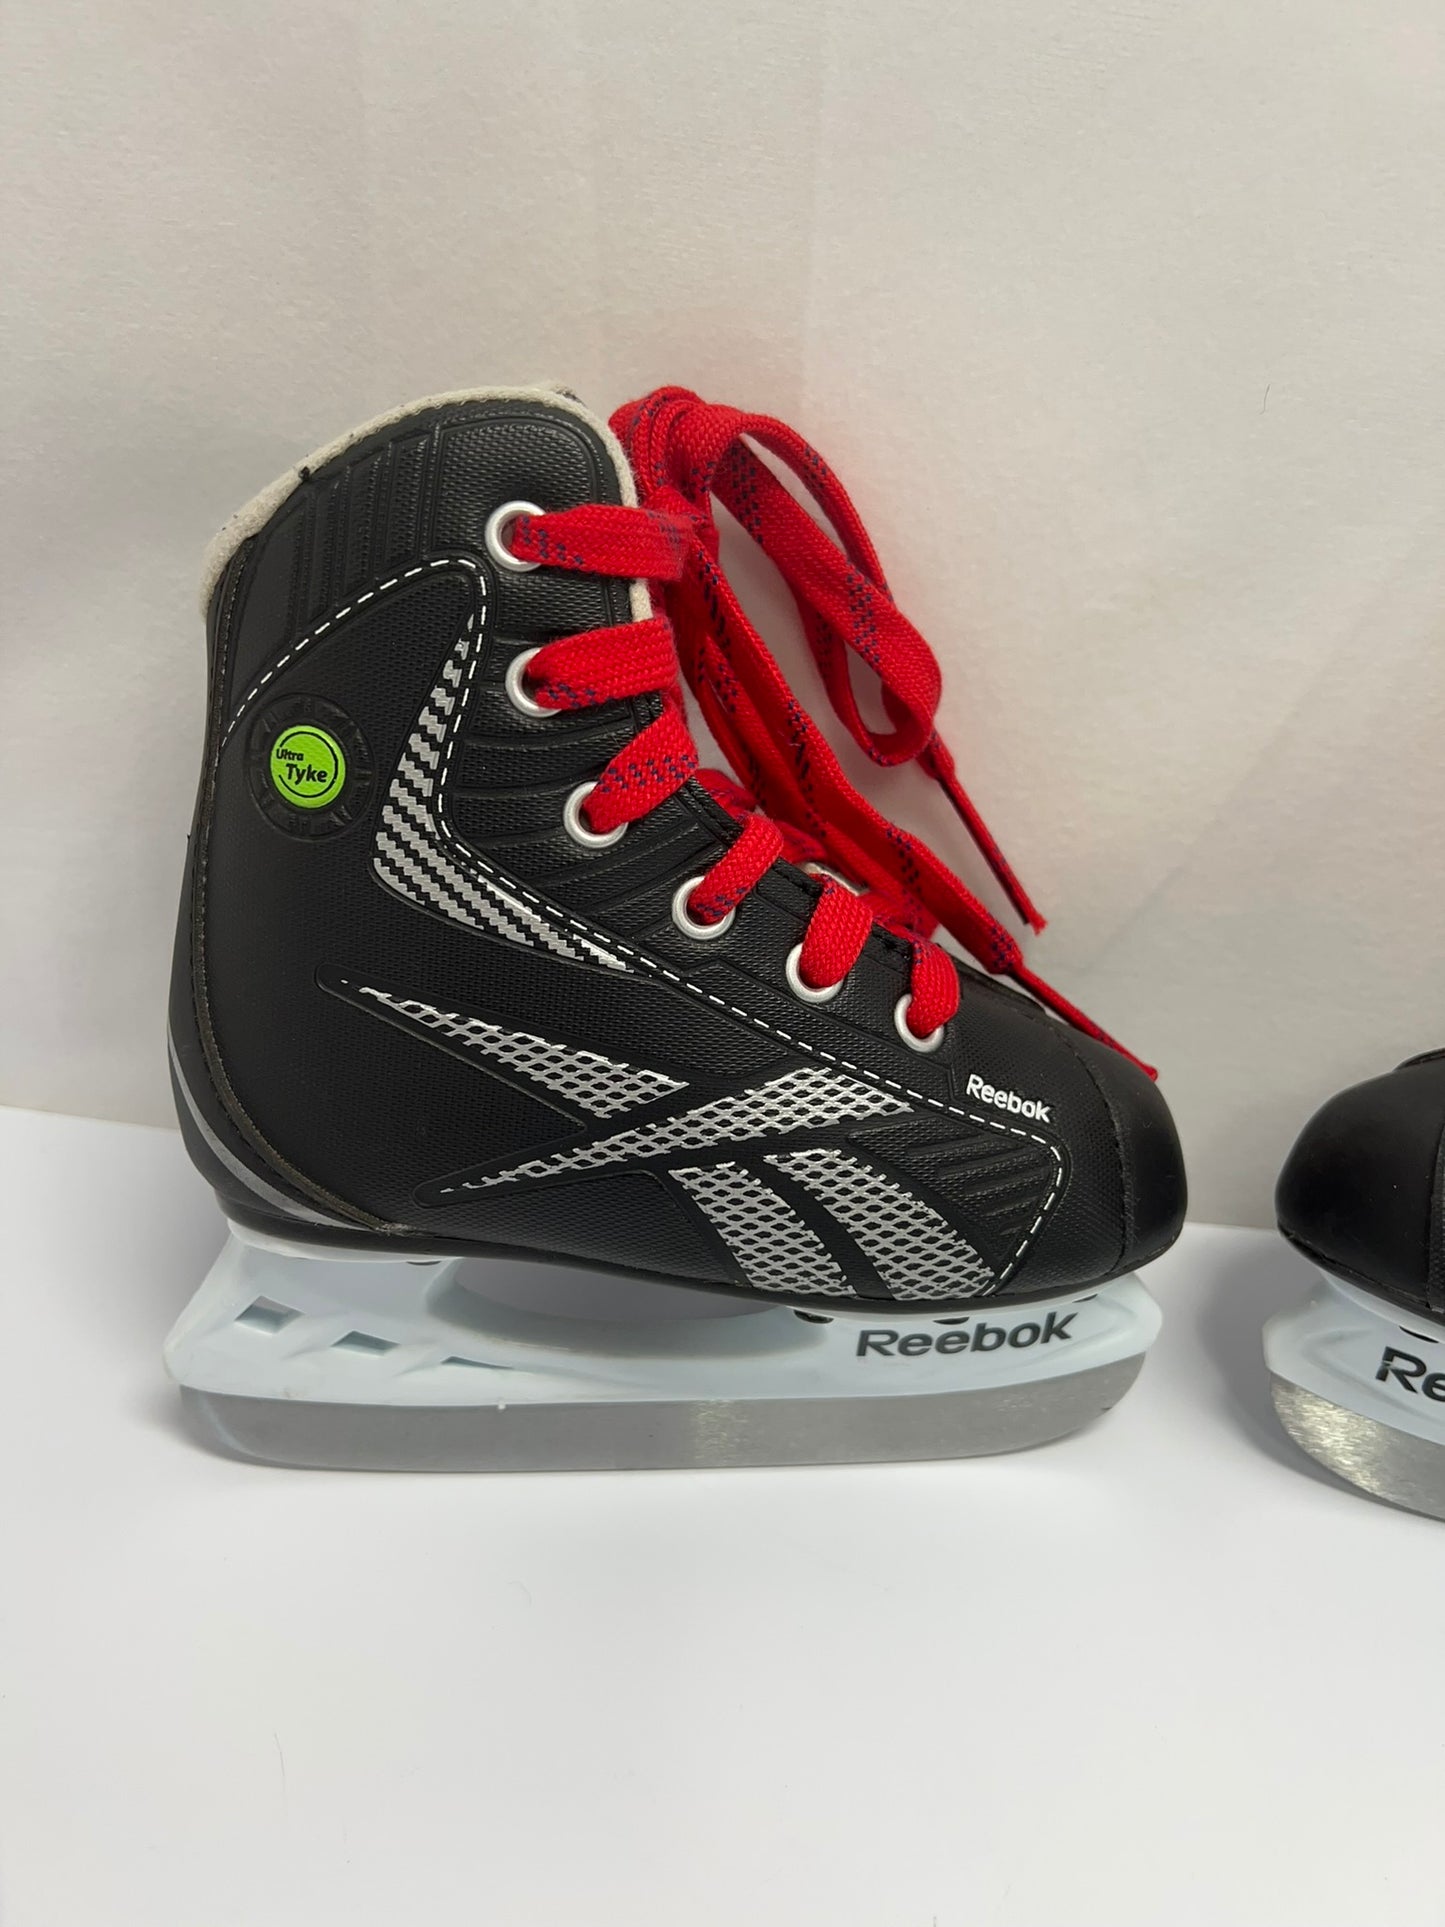 Hockey Skates Child Size 6 Toddler Reebok Soft Skates As New Excellent Quality